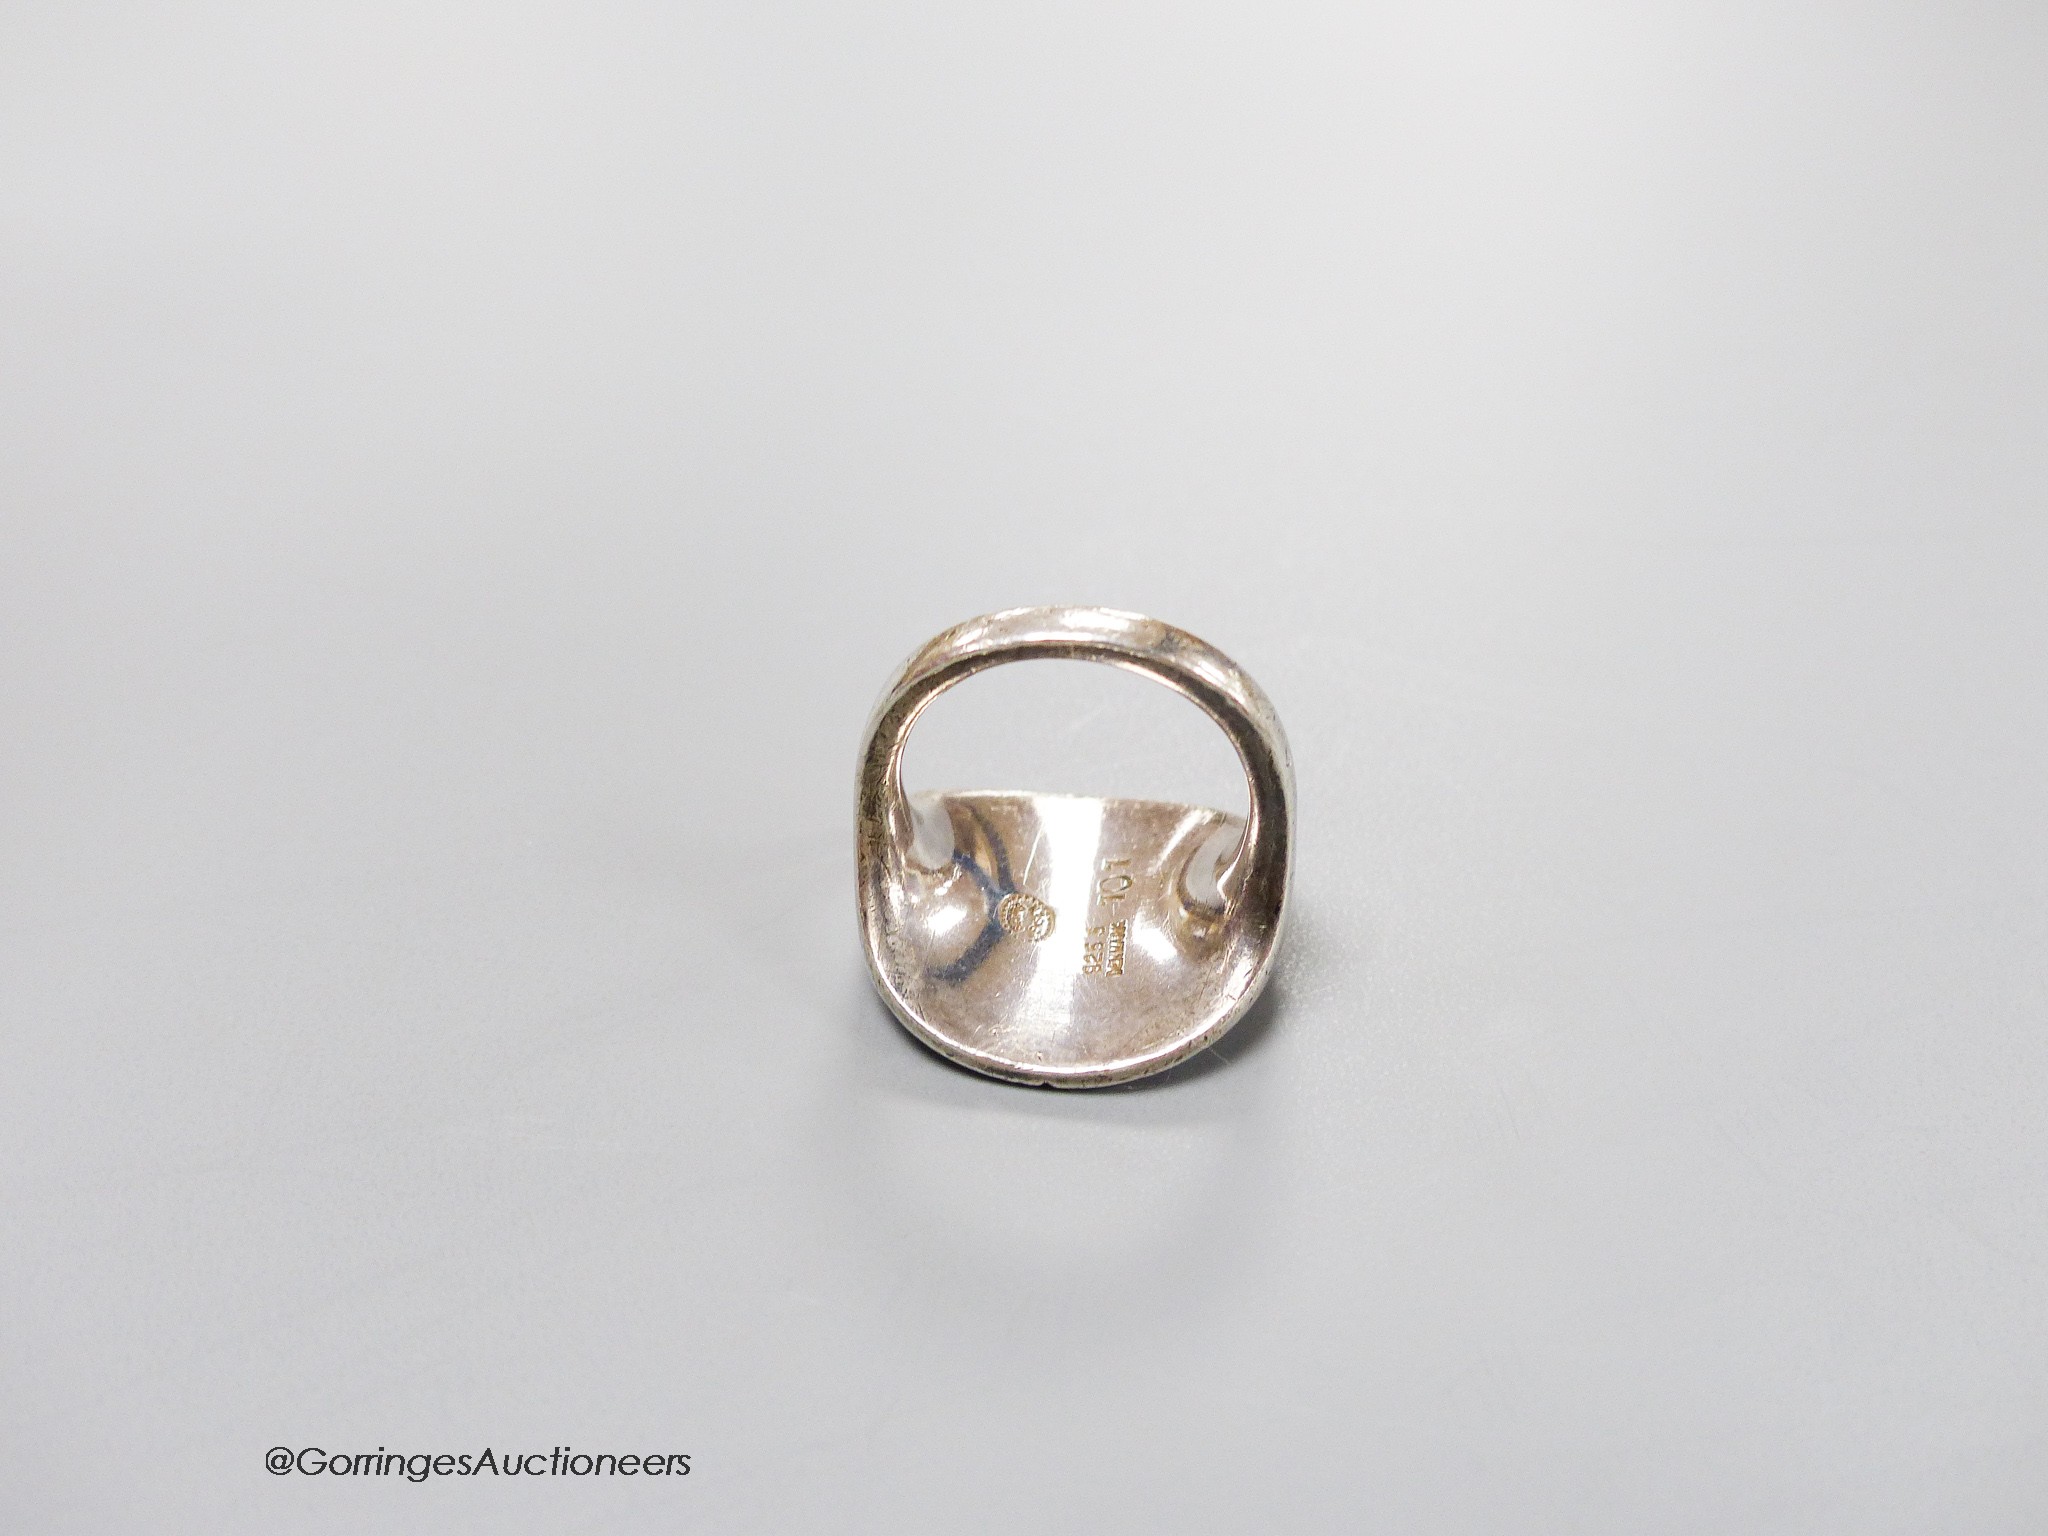 A Georg Jensen 925 sterling ring, design no. 101?, size L, 10.1 grams.